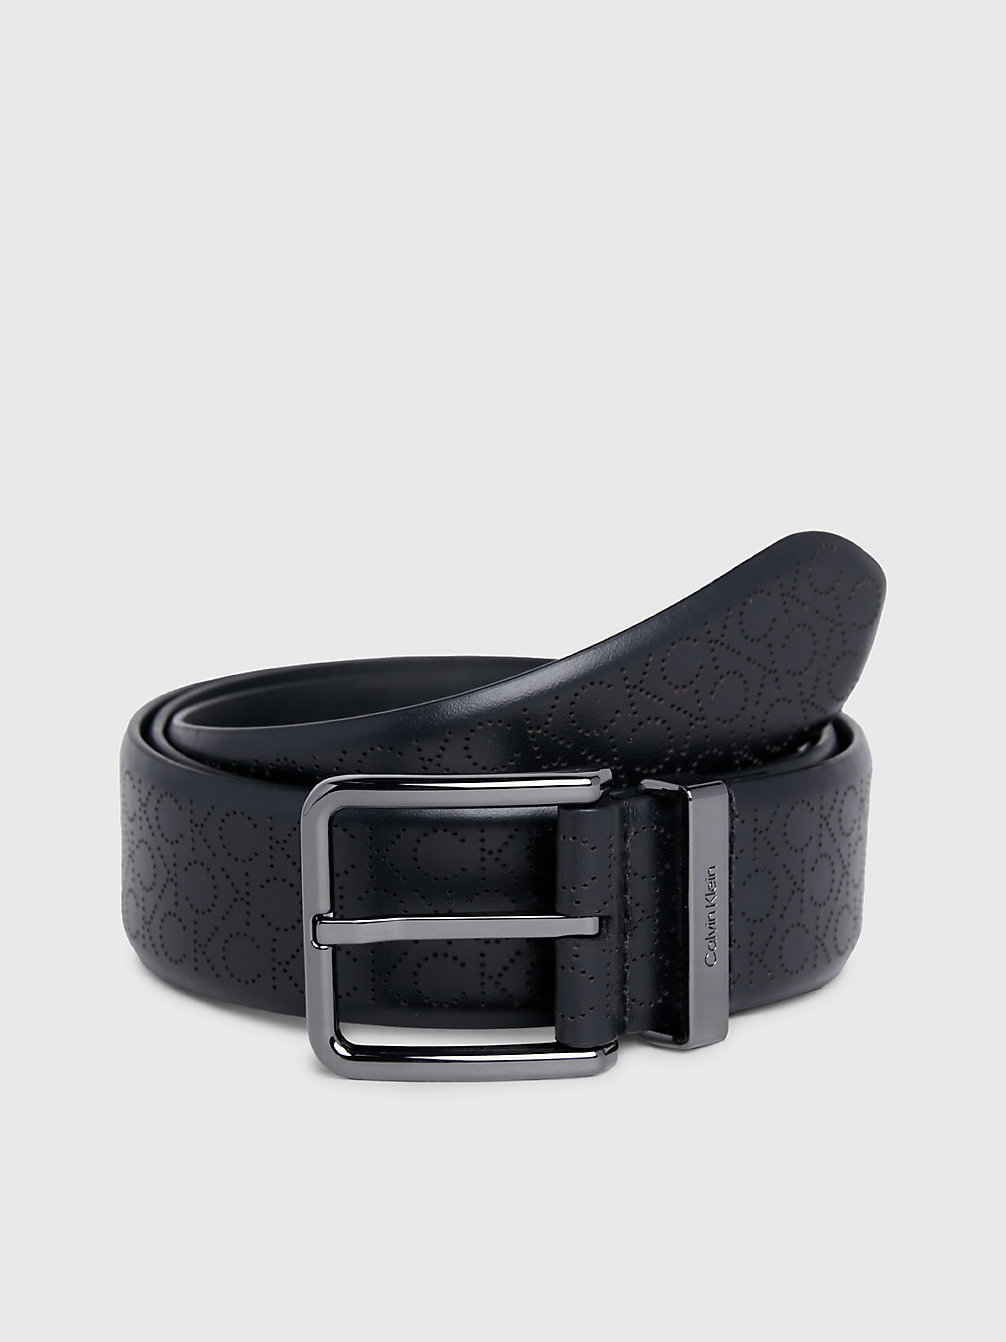 PERFORATED CK MONO BLACK Leather Belt undefined Men Calvin Klein